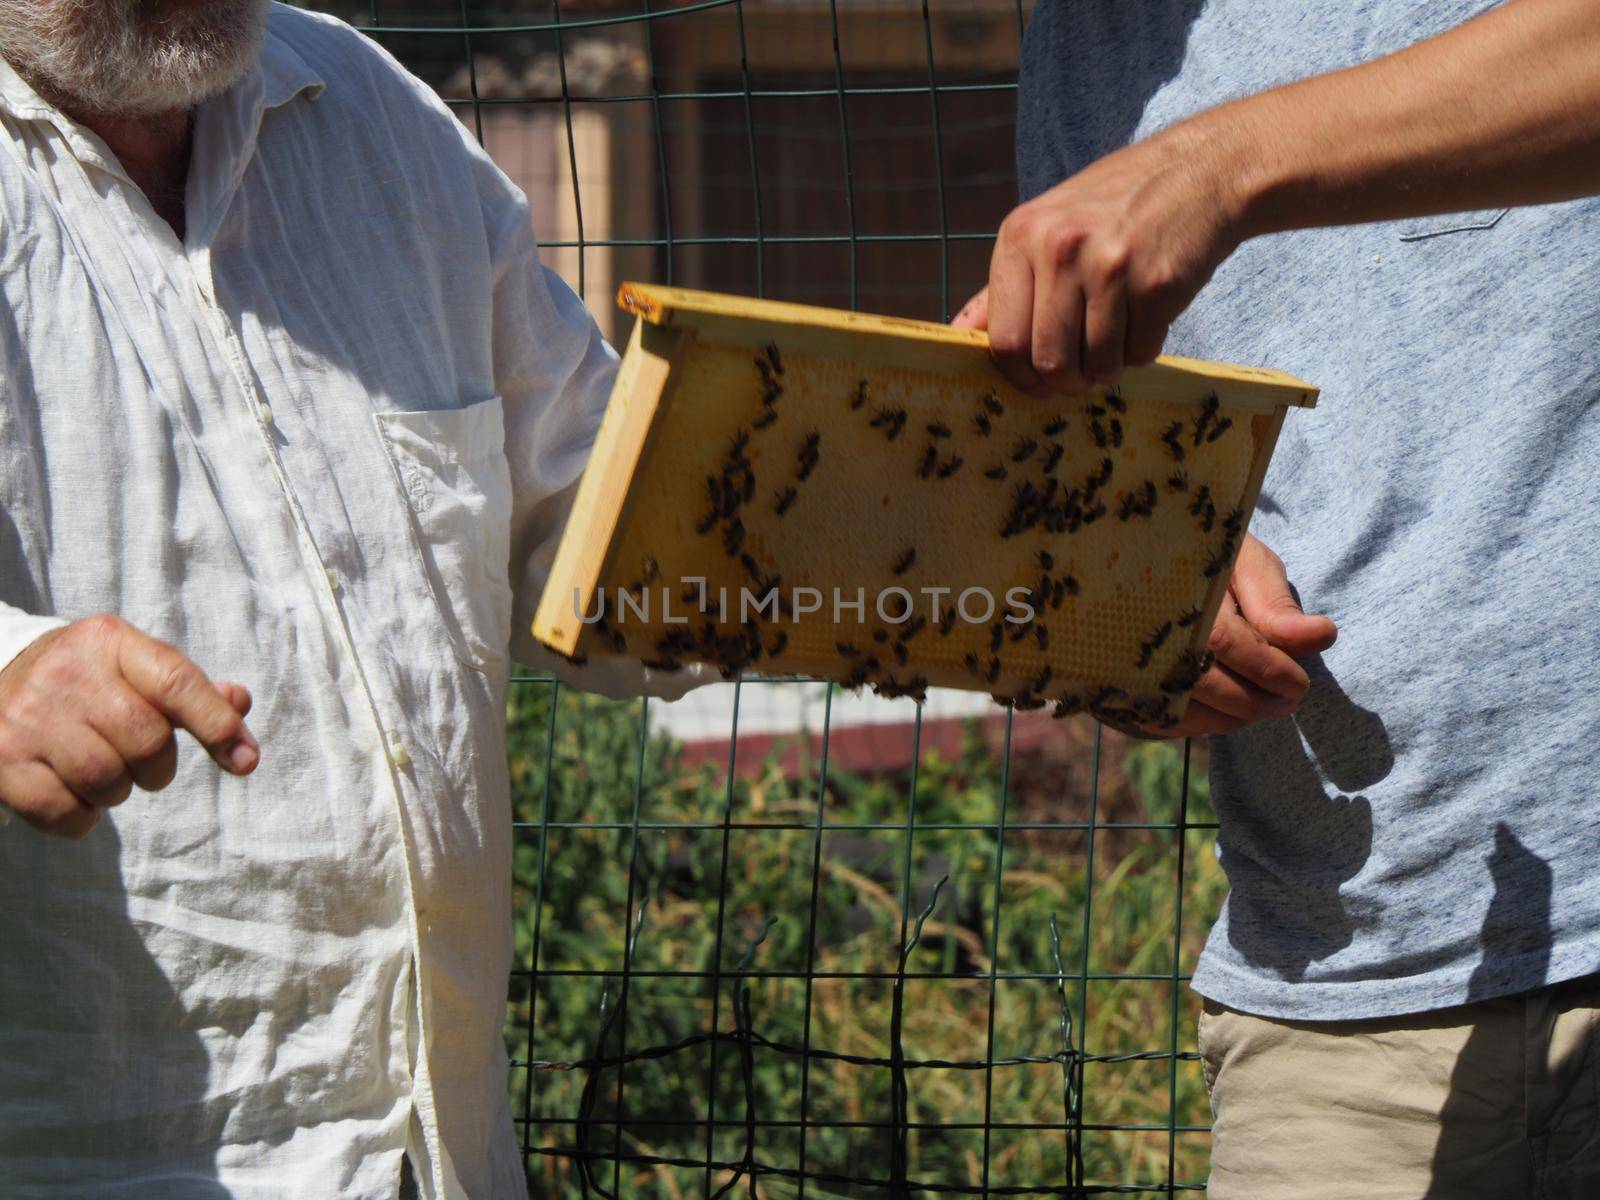 Beekeeper working with bees and beehives on the apiary. Beekeeping concept. Beekeeper harvesting honey Beekeeper on apiary.